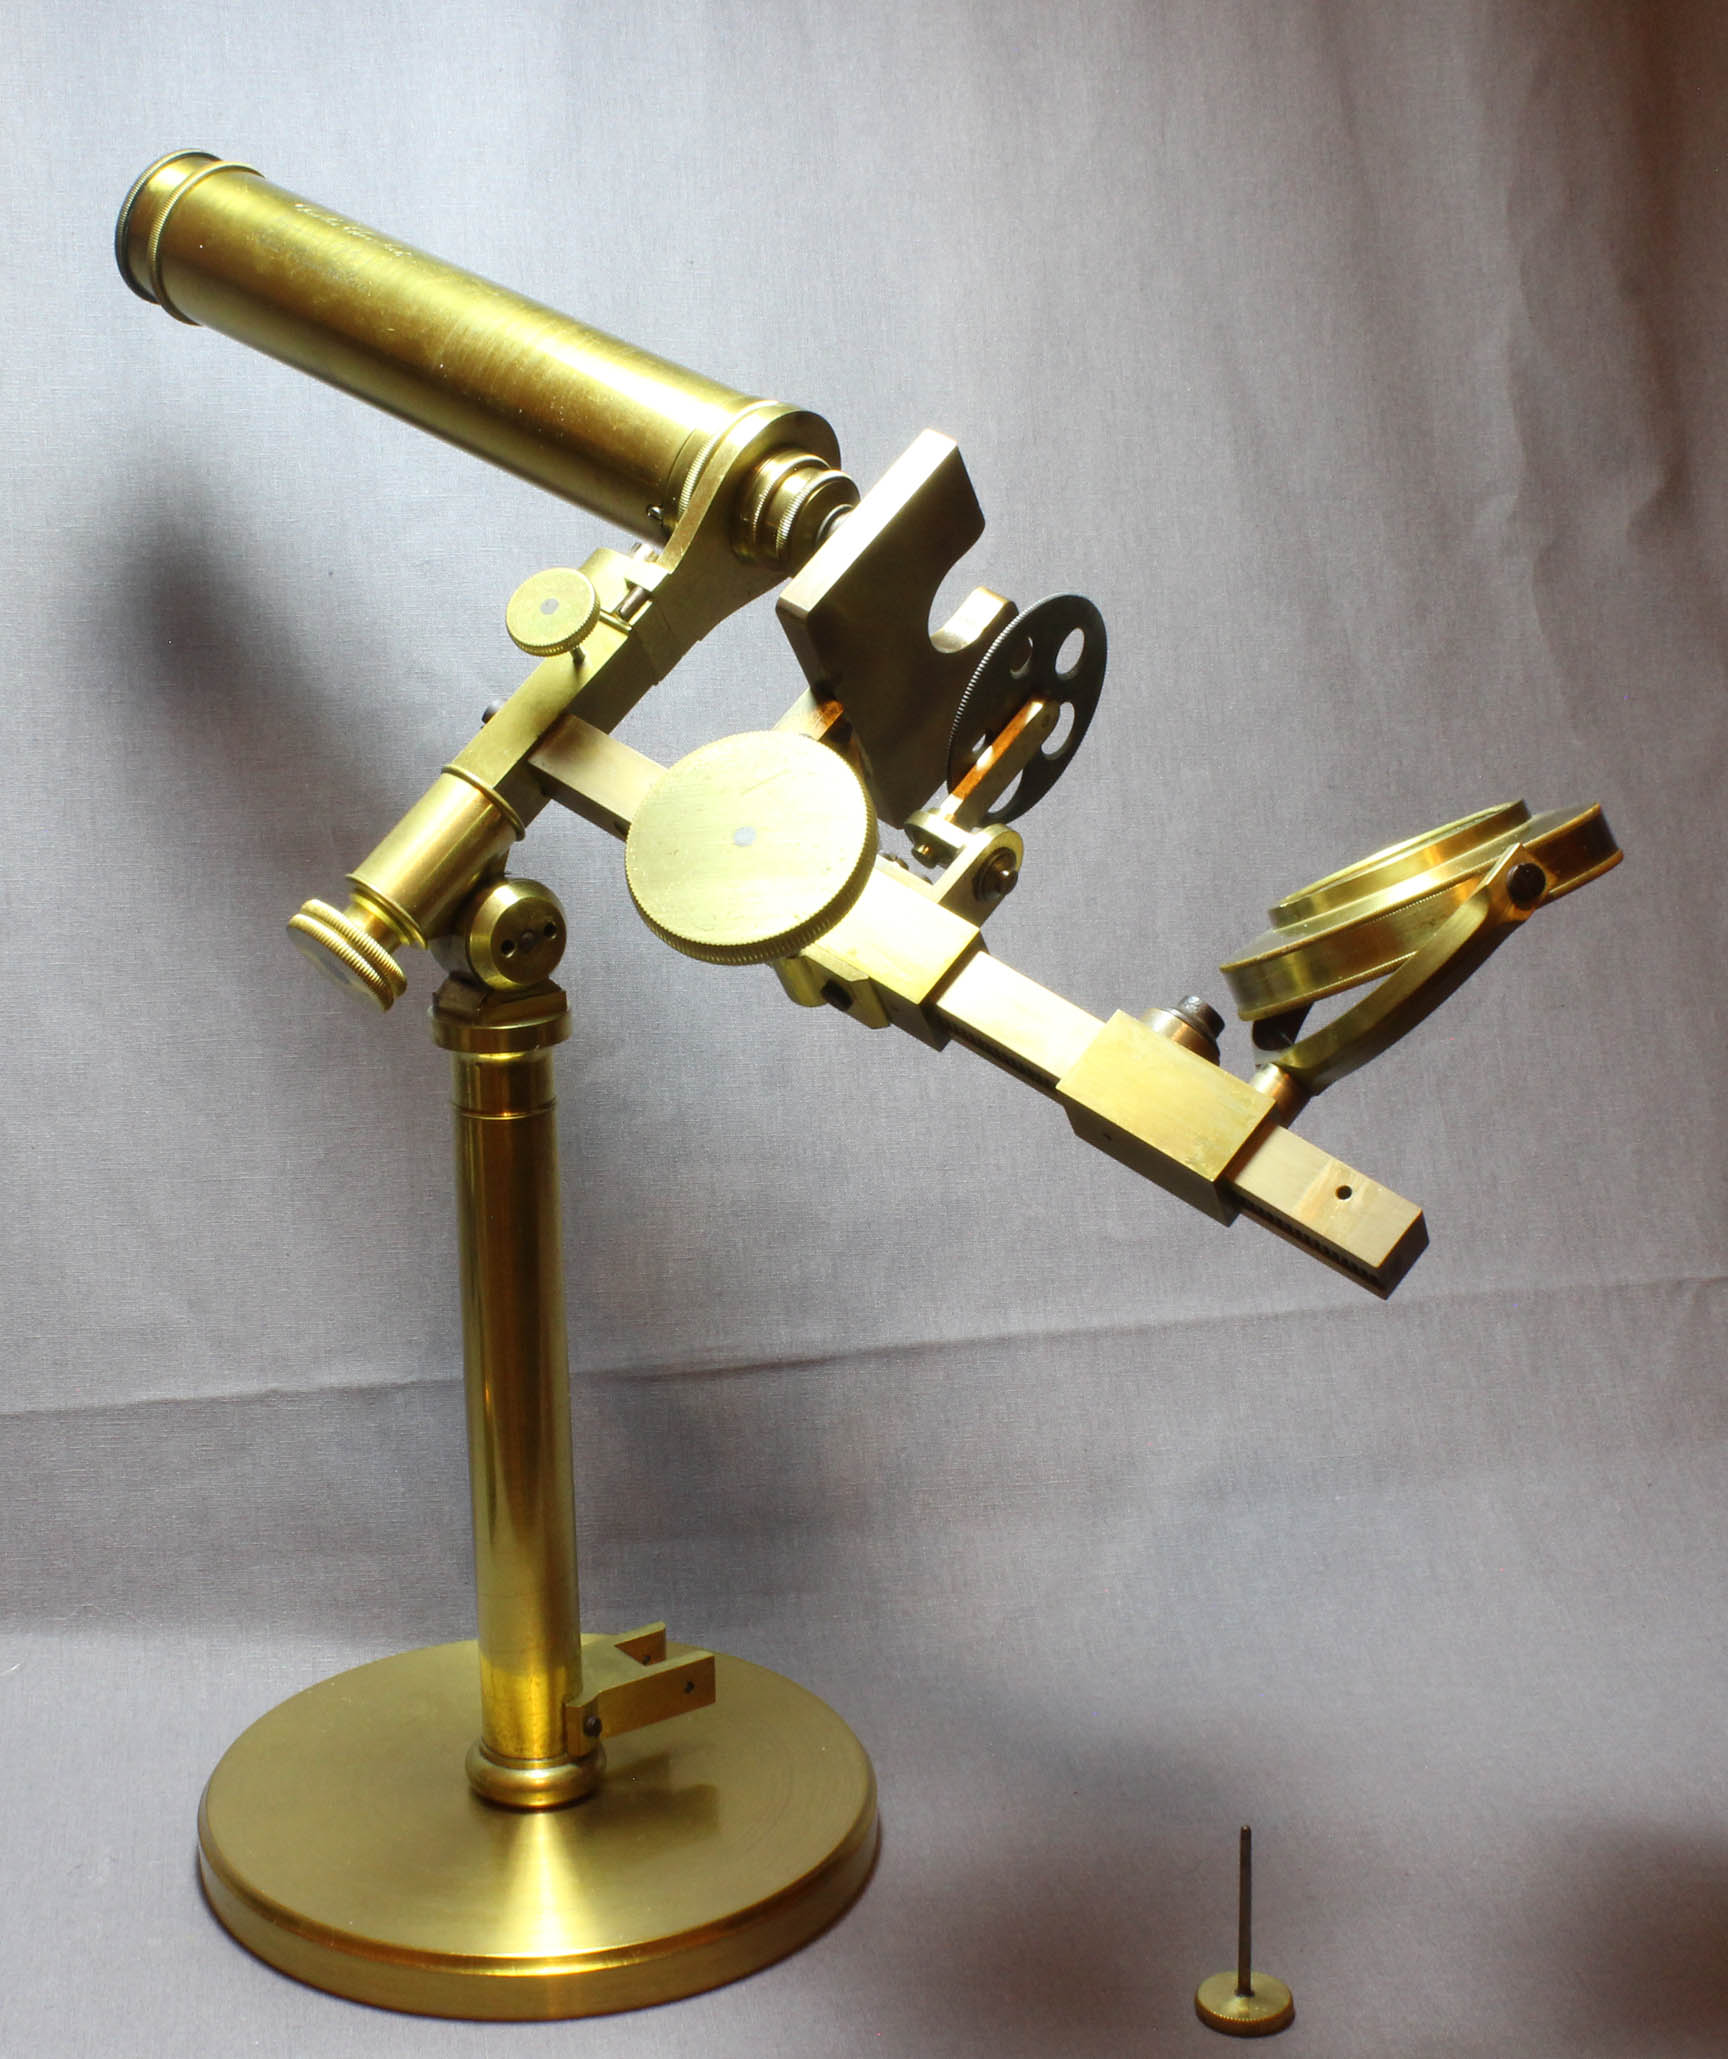 Chevalier Universal Microscope